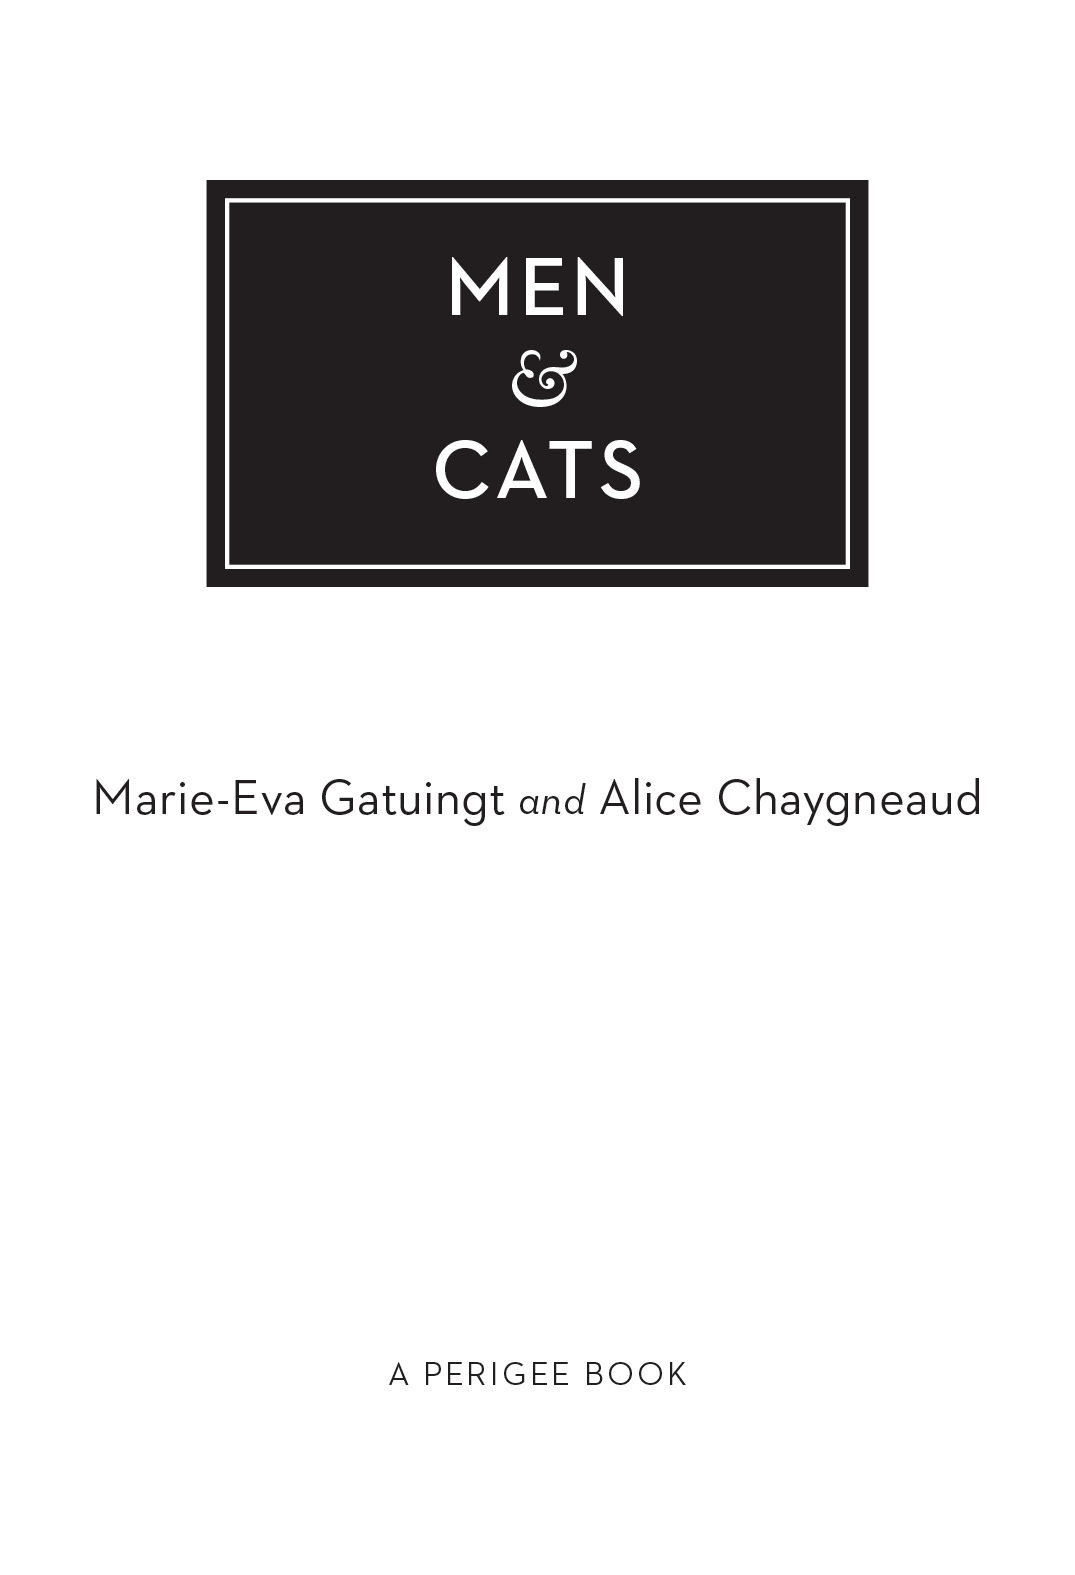 Men Cats - image 2